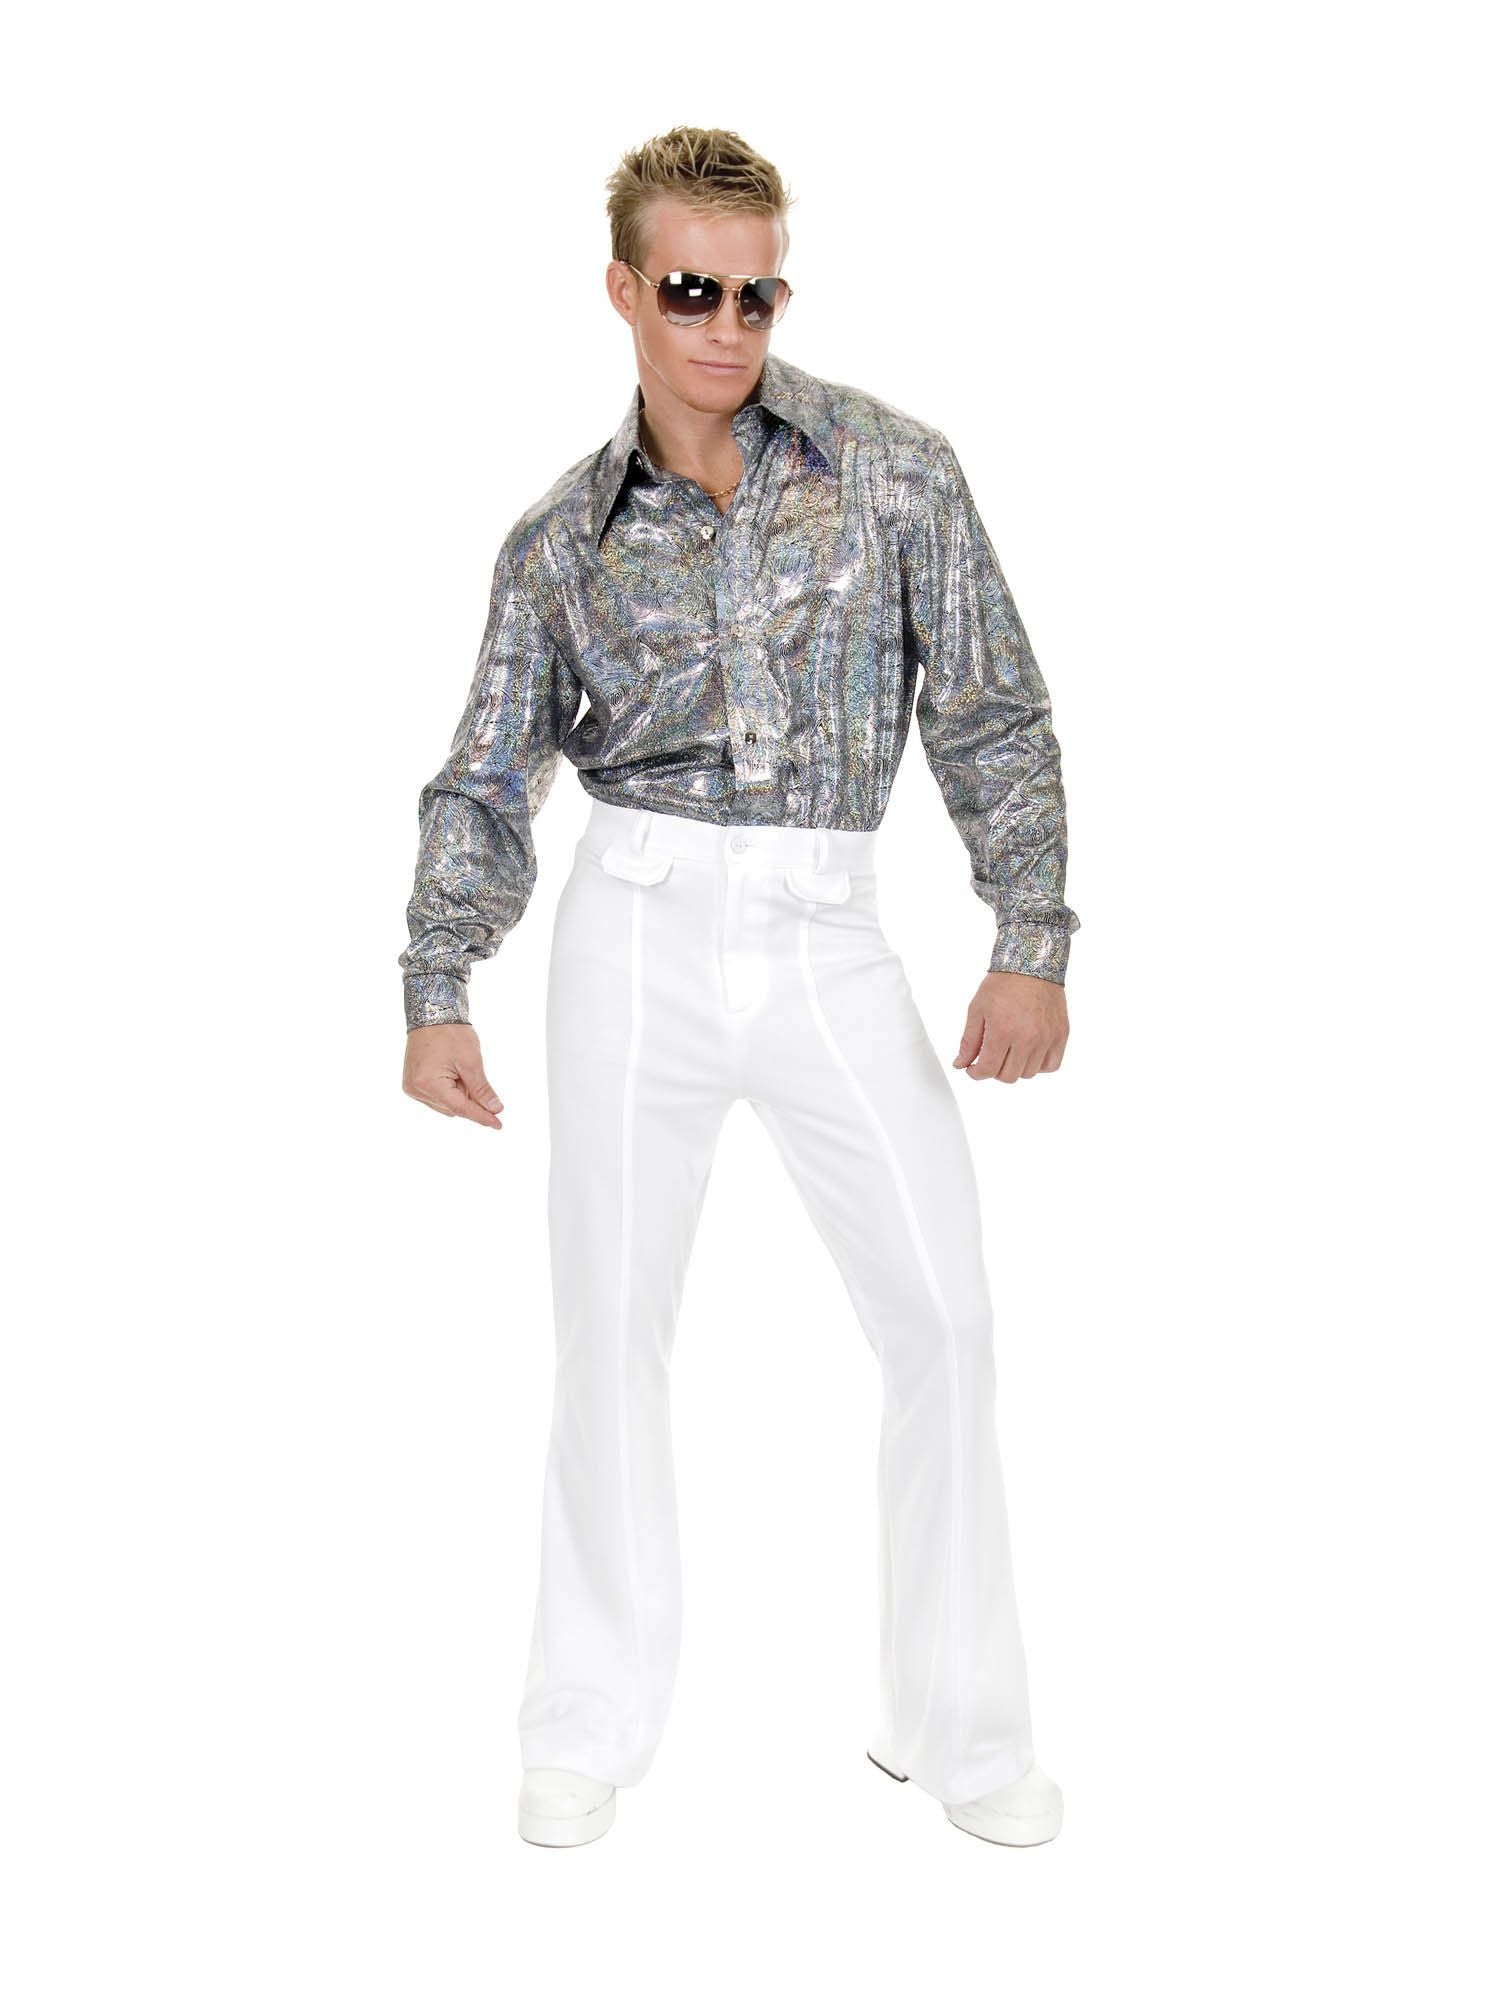 Adult White Disco Pants Costume - costumes.com